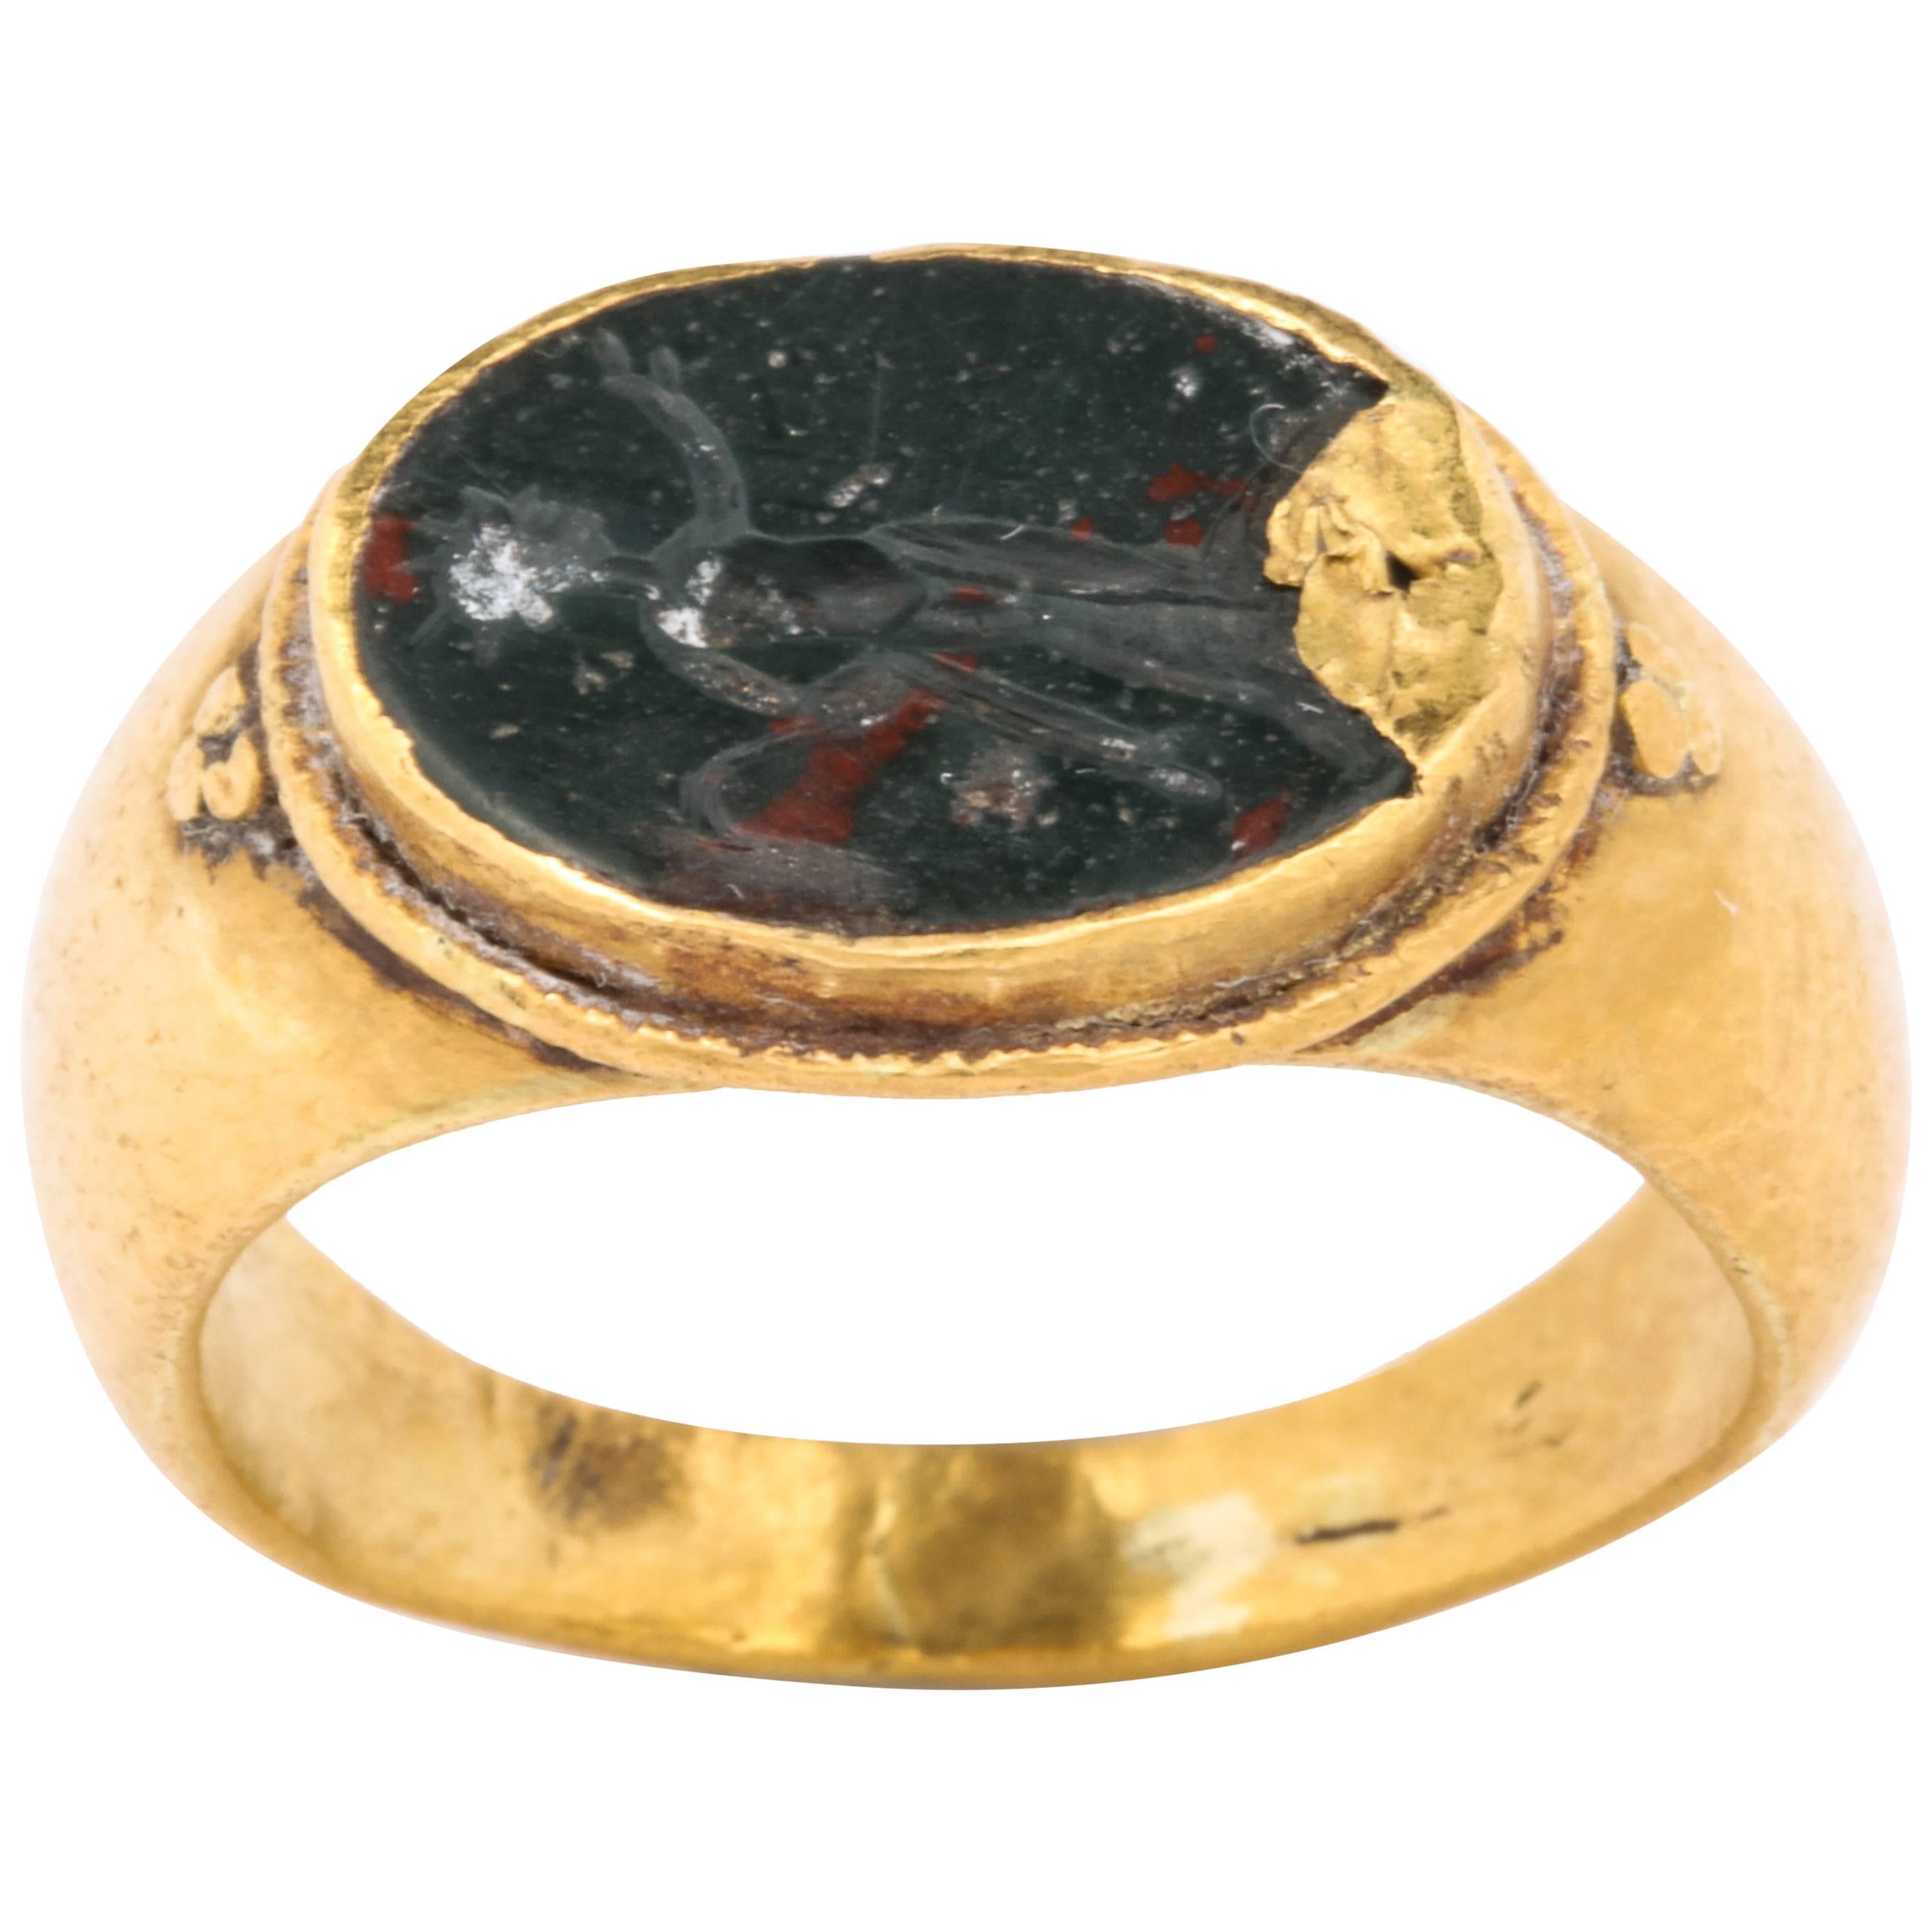 Ancient Roman Intaglio Ring of Helios